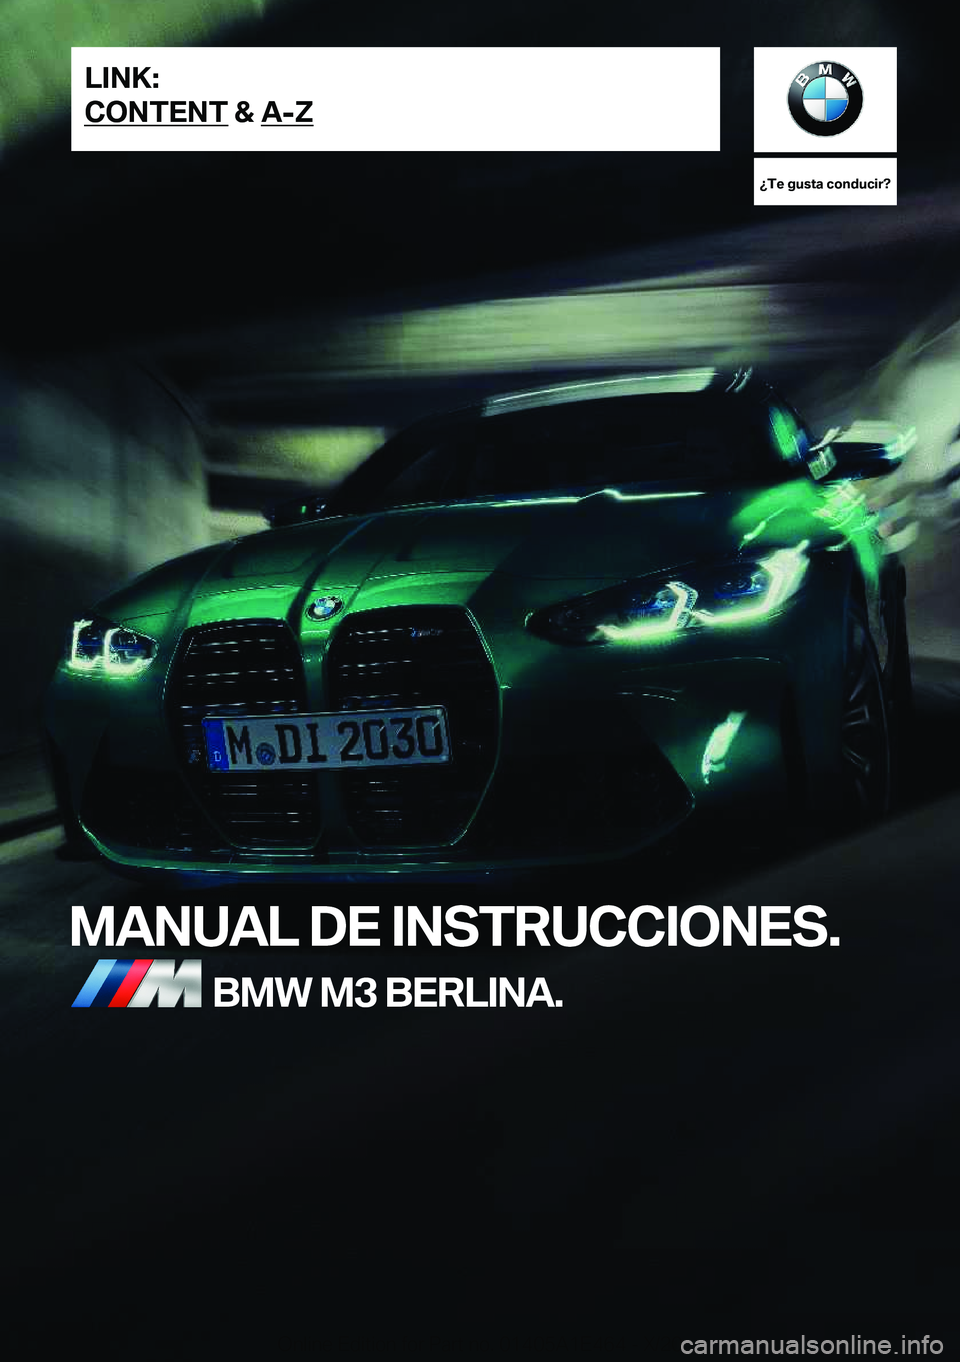 BMW M3 2021  Manuales de Empleo (in Spanish) ��T�e��g�u�s�t�a��c�o�n�d�u�c�i�r� 
�M�A�N�U�A�L��D�E��I�N�S�T�R�U�C�C�I�O�N�E�S�.�B�M�W��M�3��B�E�R�L�I�N�A�.�L�I�N�K�:
�C�O�N�T�E�N�T��&��A�-�Z�O�n�l�i�n�e��E�d�i�t�i�o�n��f�o�r��P�a�r�t